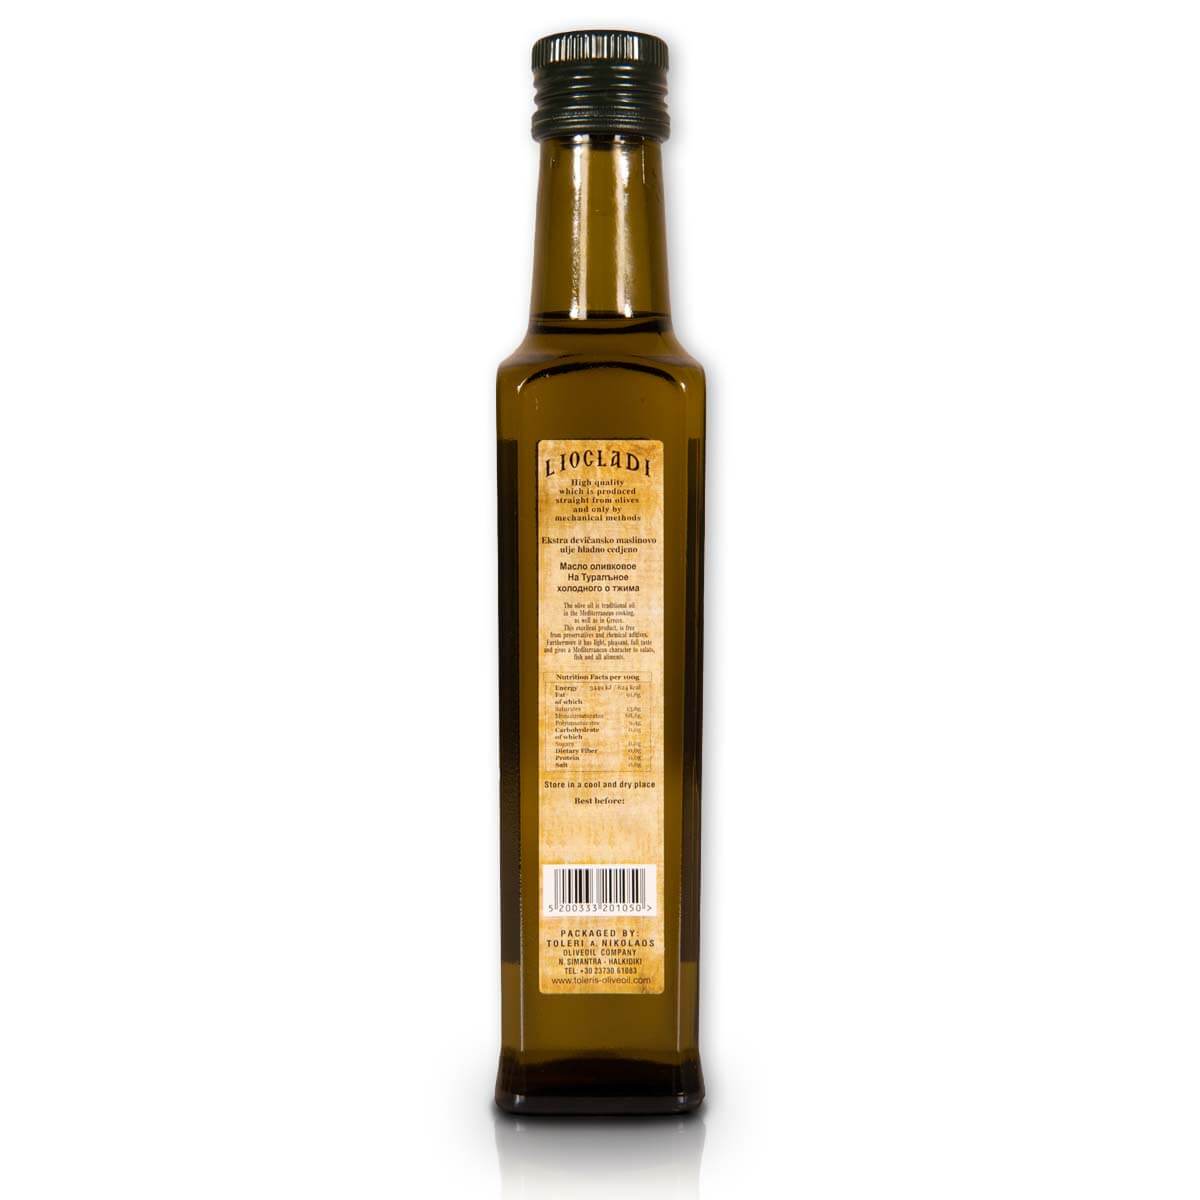 Oliwa z oliwek extra virgin Liocladi szklana butelka 250 ml 0,5% | Kolebka Smaku